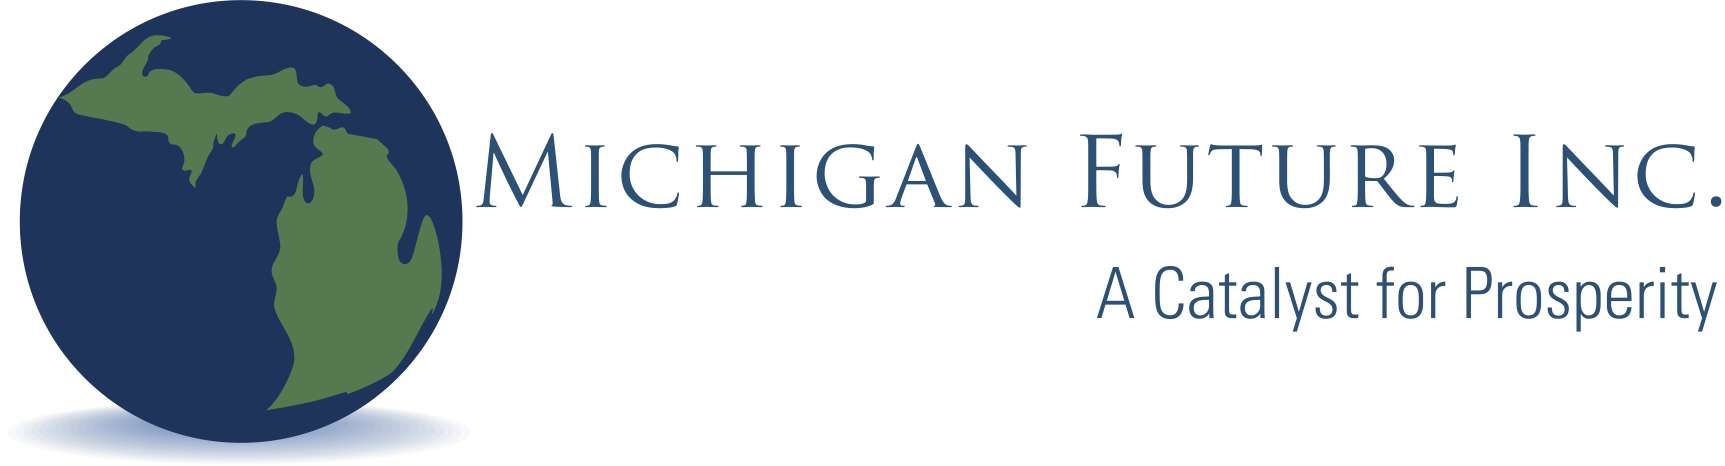 Michigan-Future-Inc.-logo-1